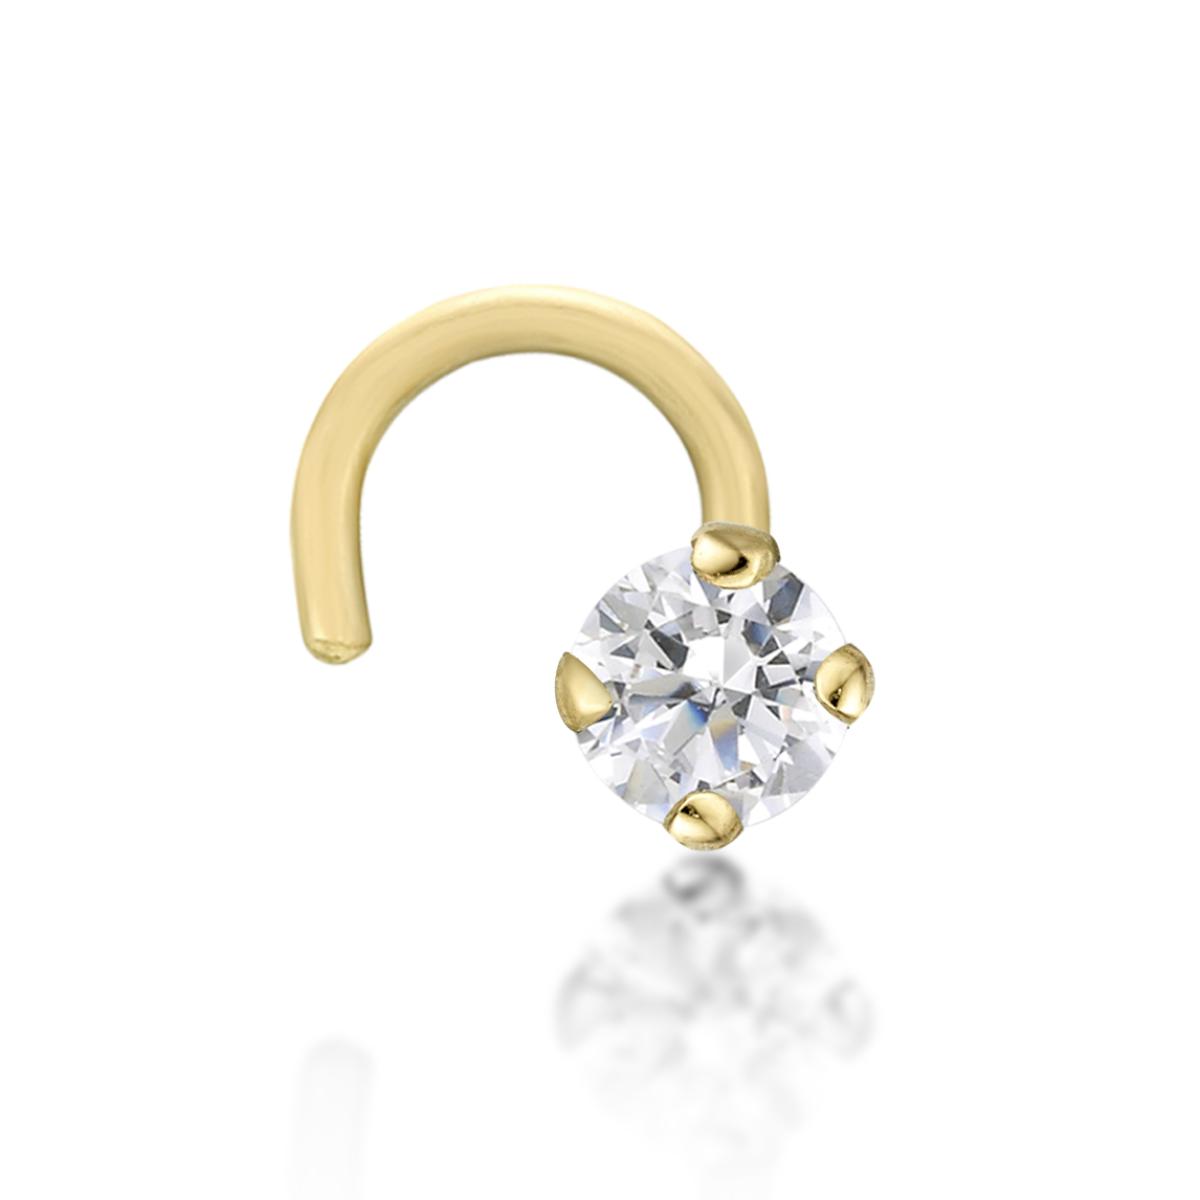 Lavari Jewelers Women's Diamond Curve Stud Nose Ring, 14K Yellow Gold, .05 Carat, 22 Gauge